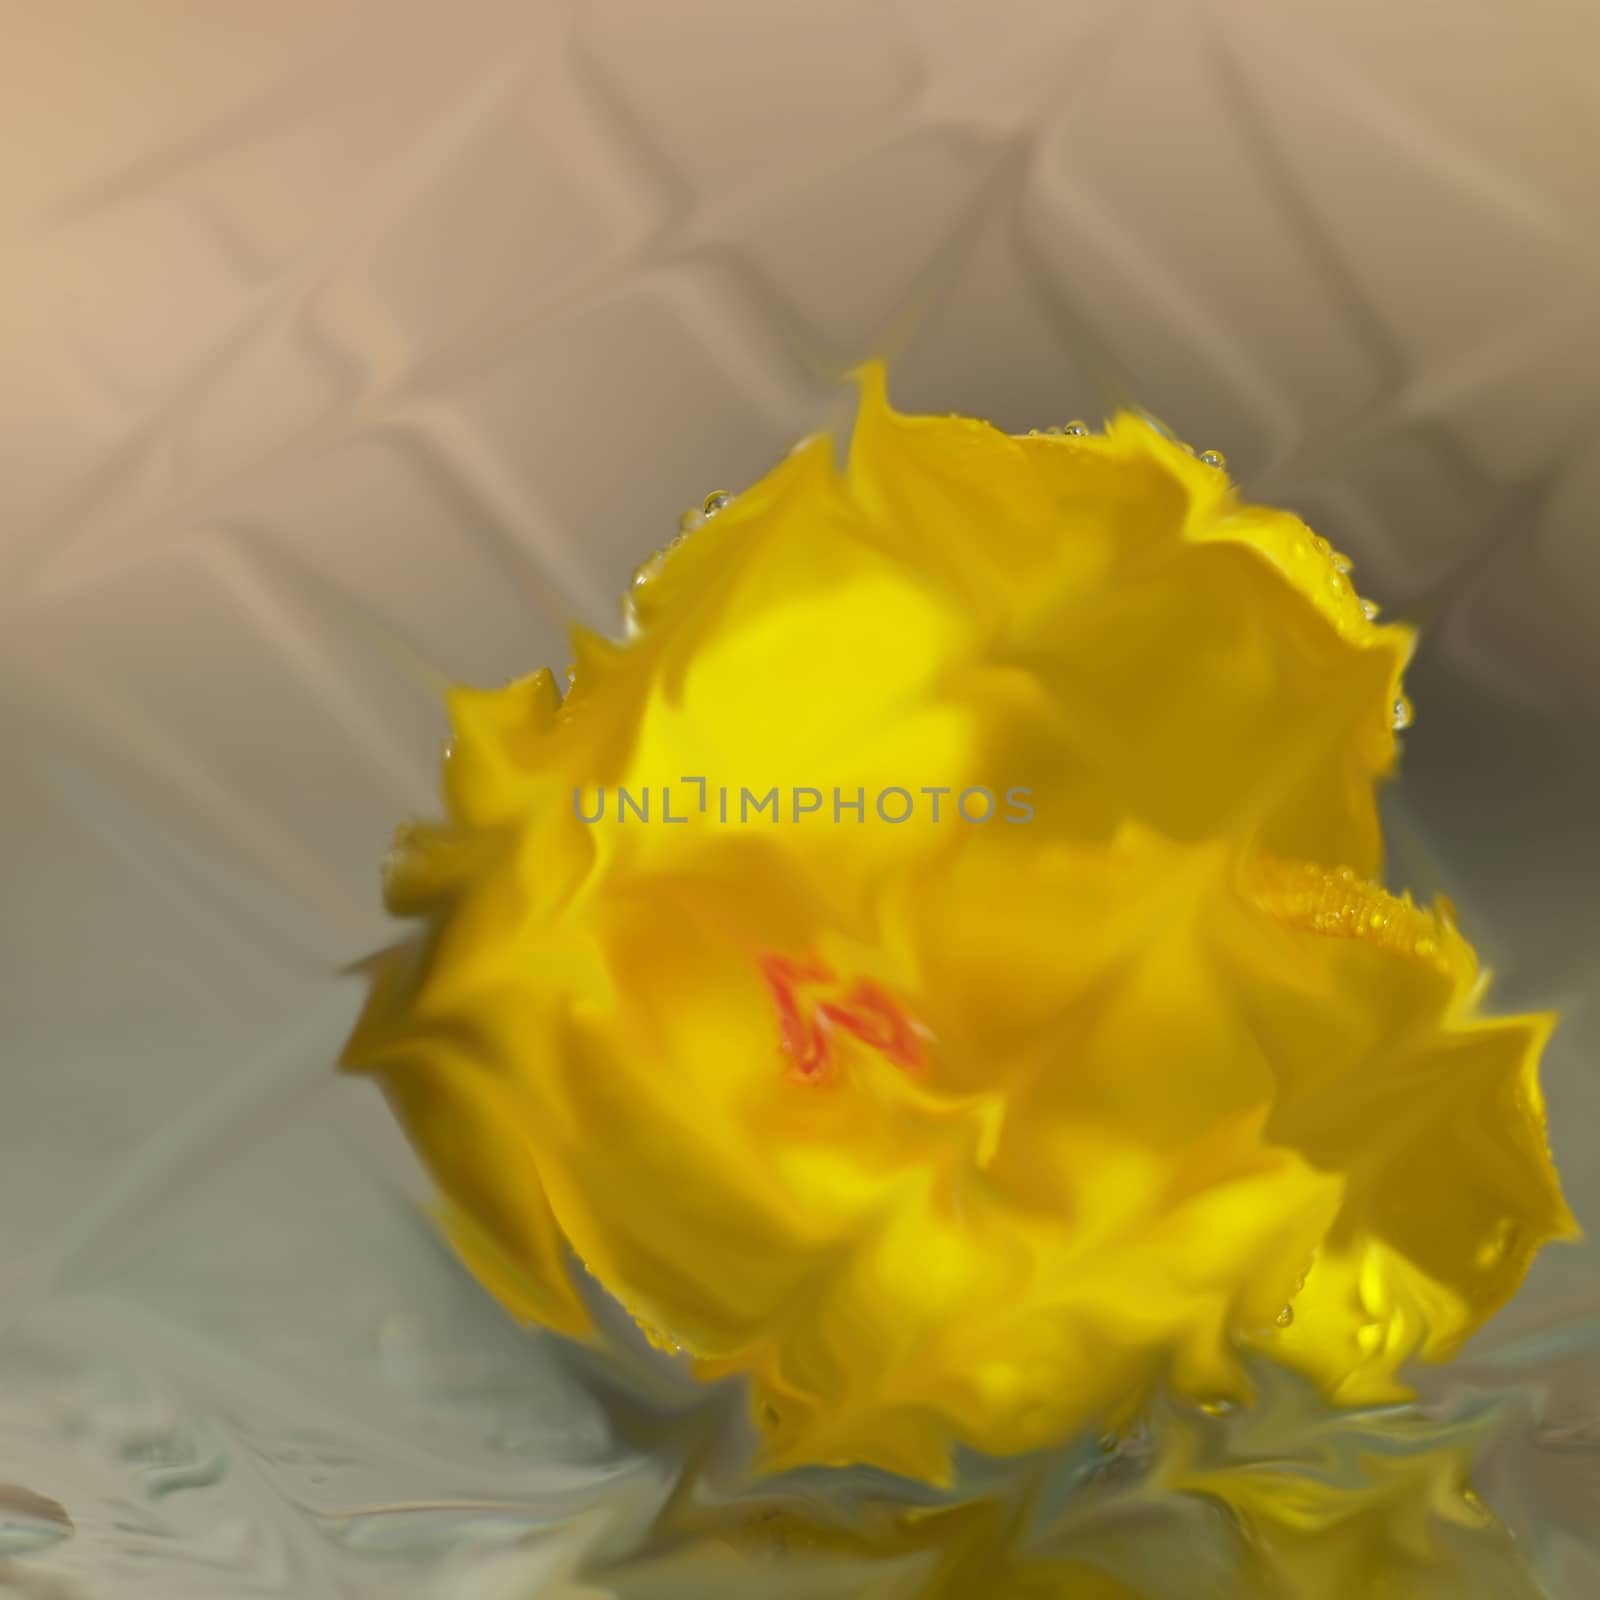 Distorted Yellow crocus flower on a wet glass surface 